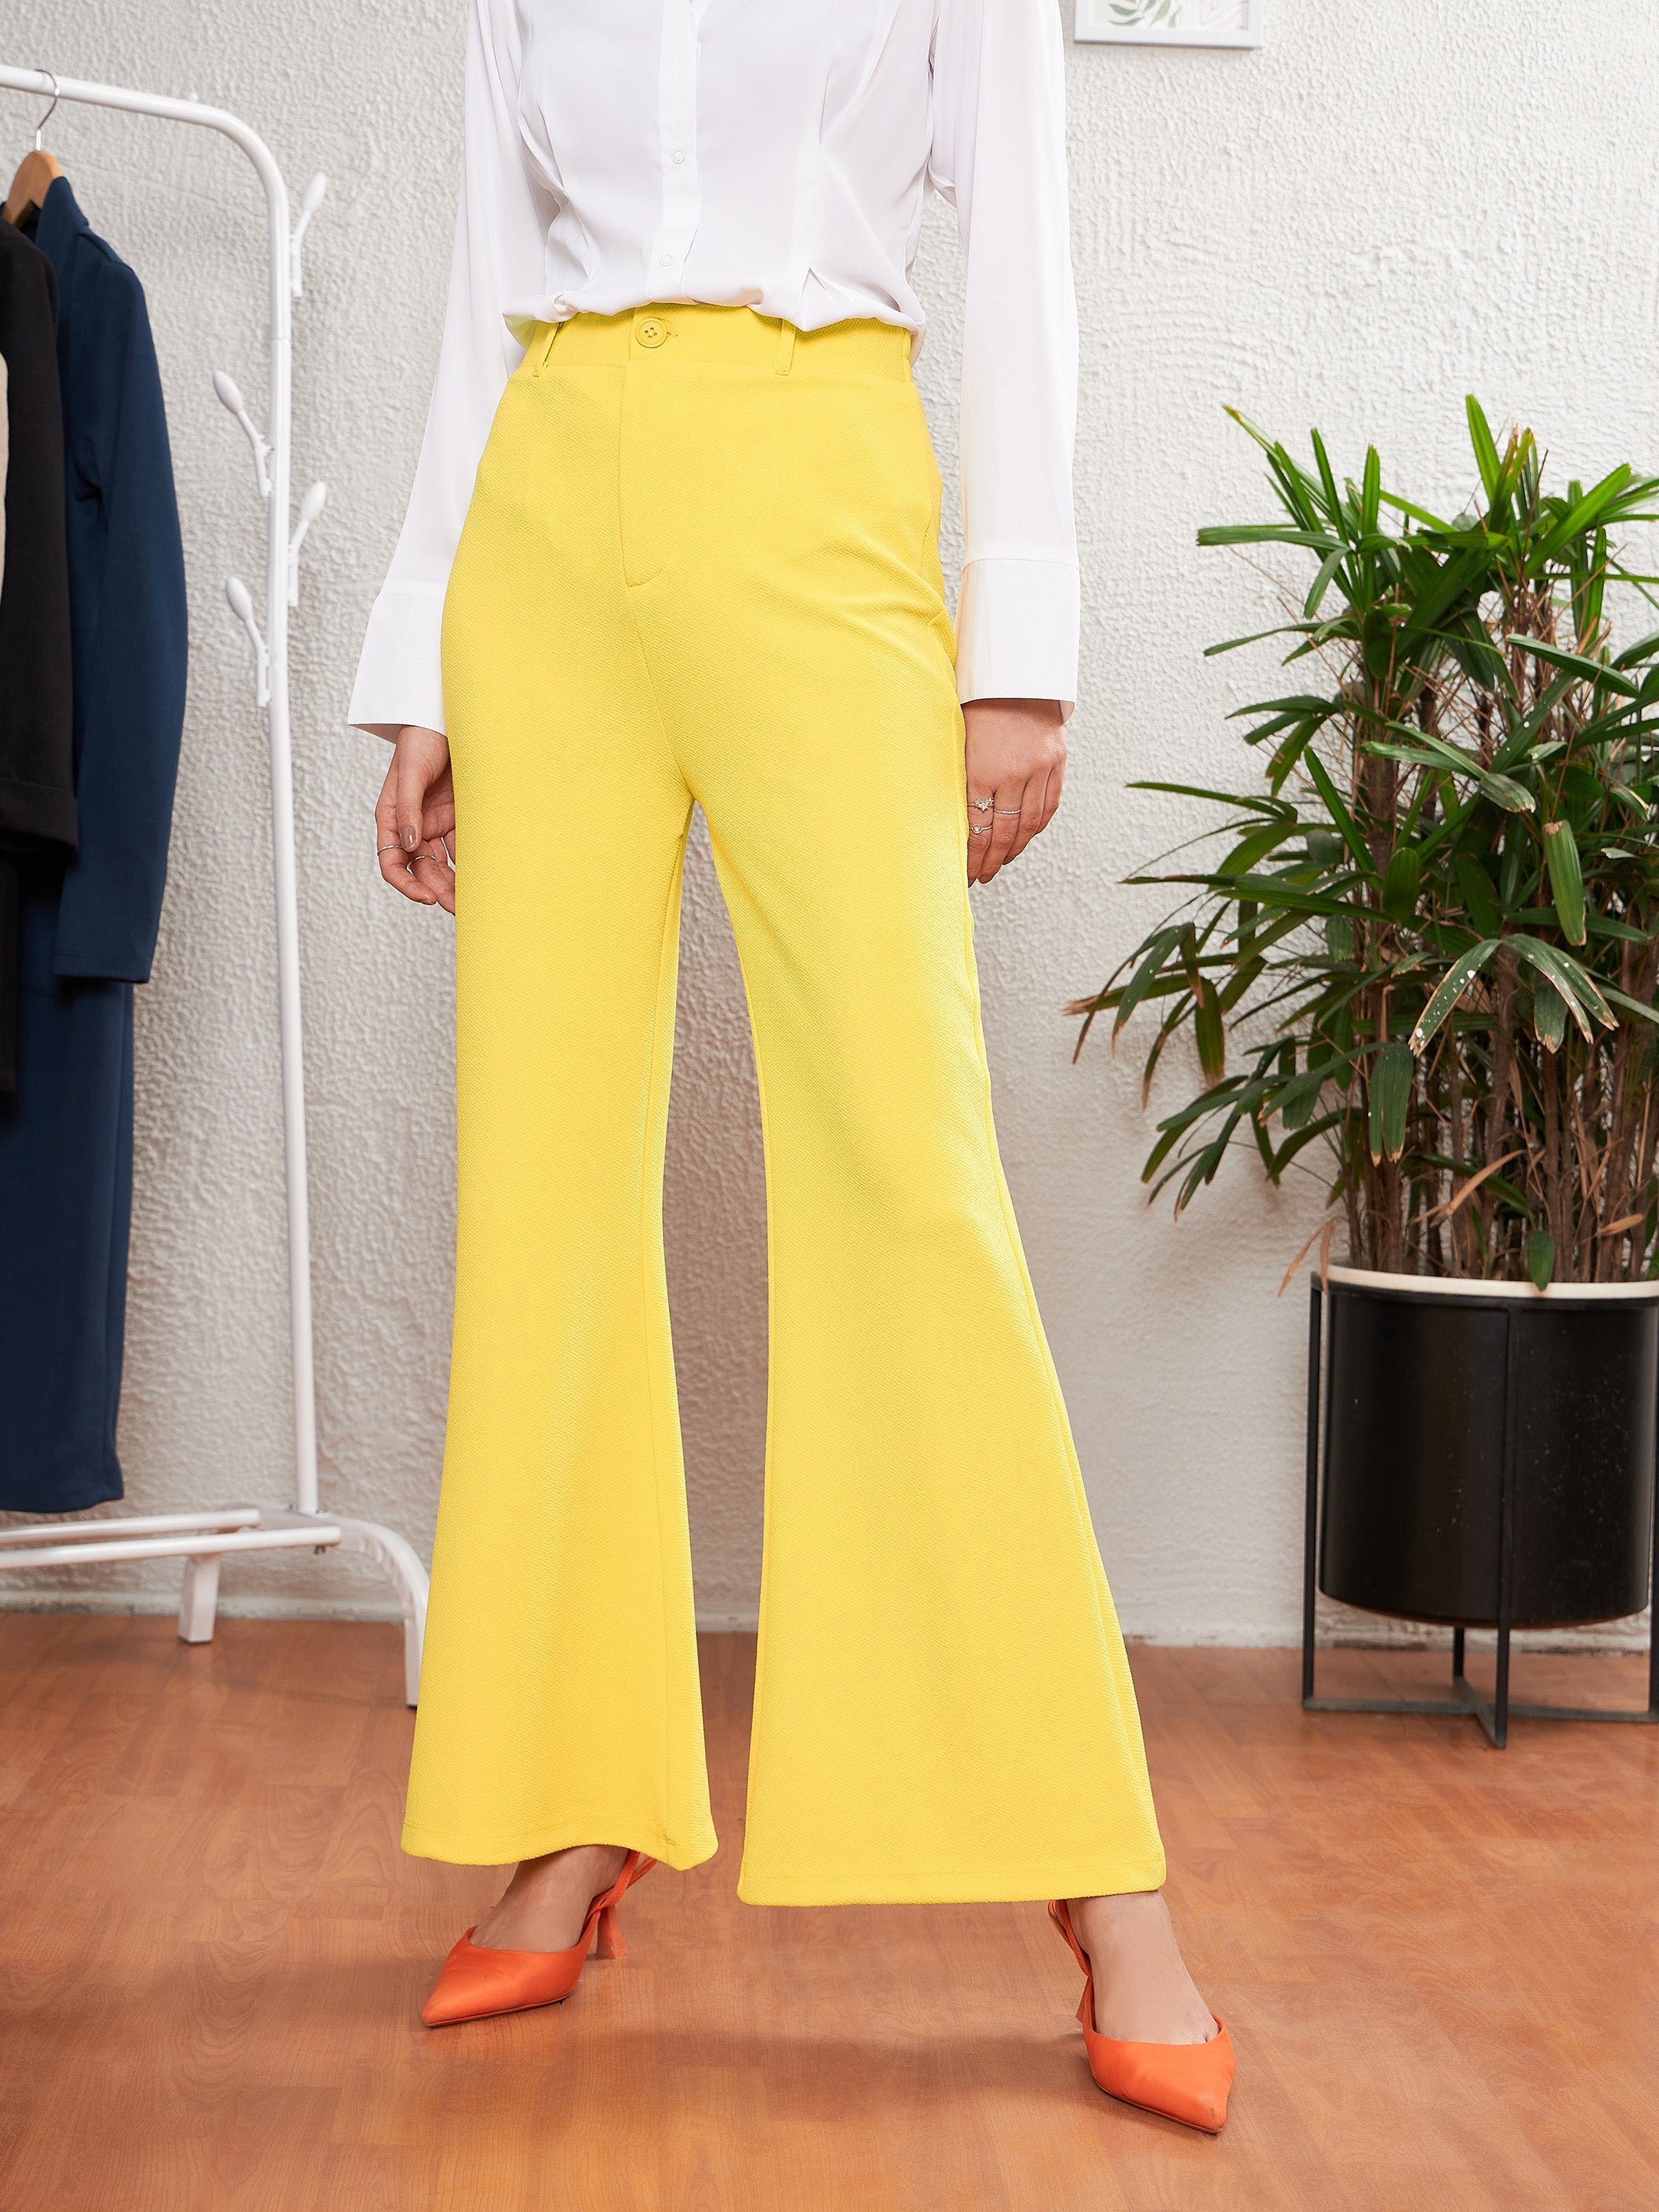 Women's Yellow Sleeveless Blazer With Bell Bottom Pants - SASSAFRAS